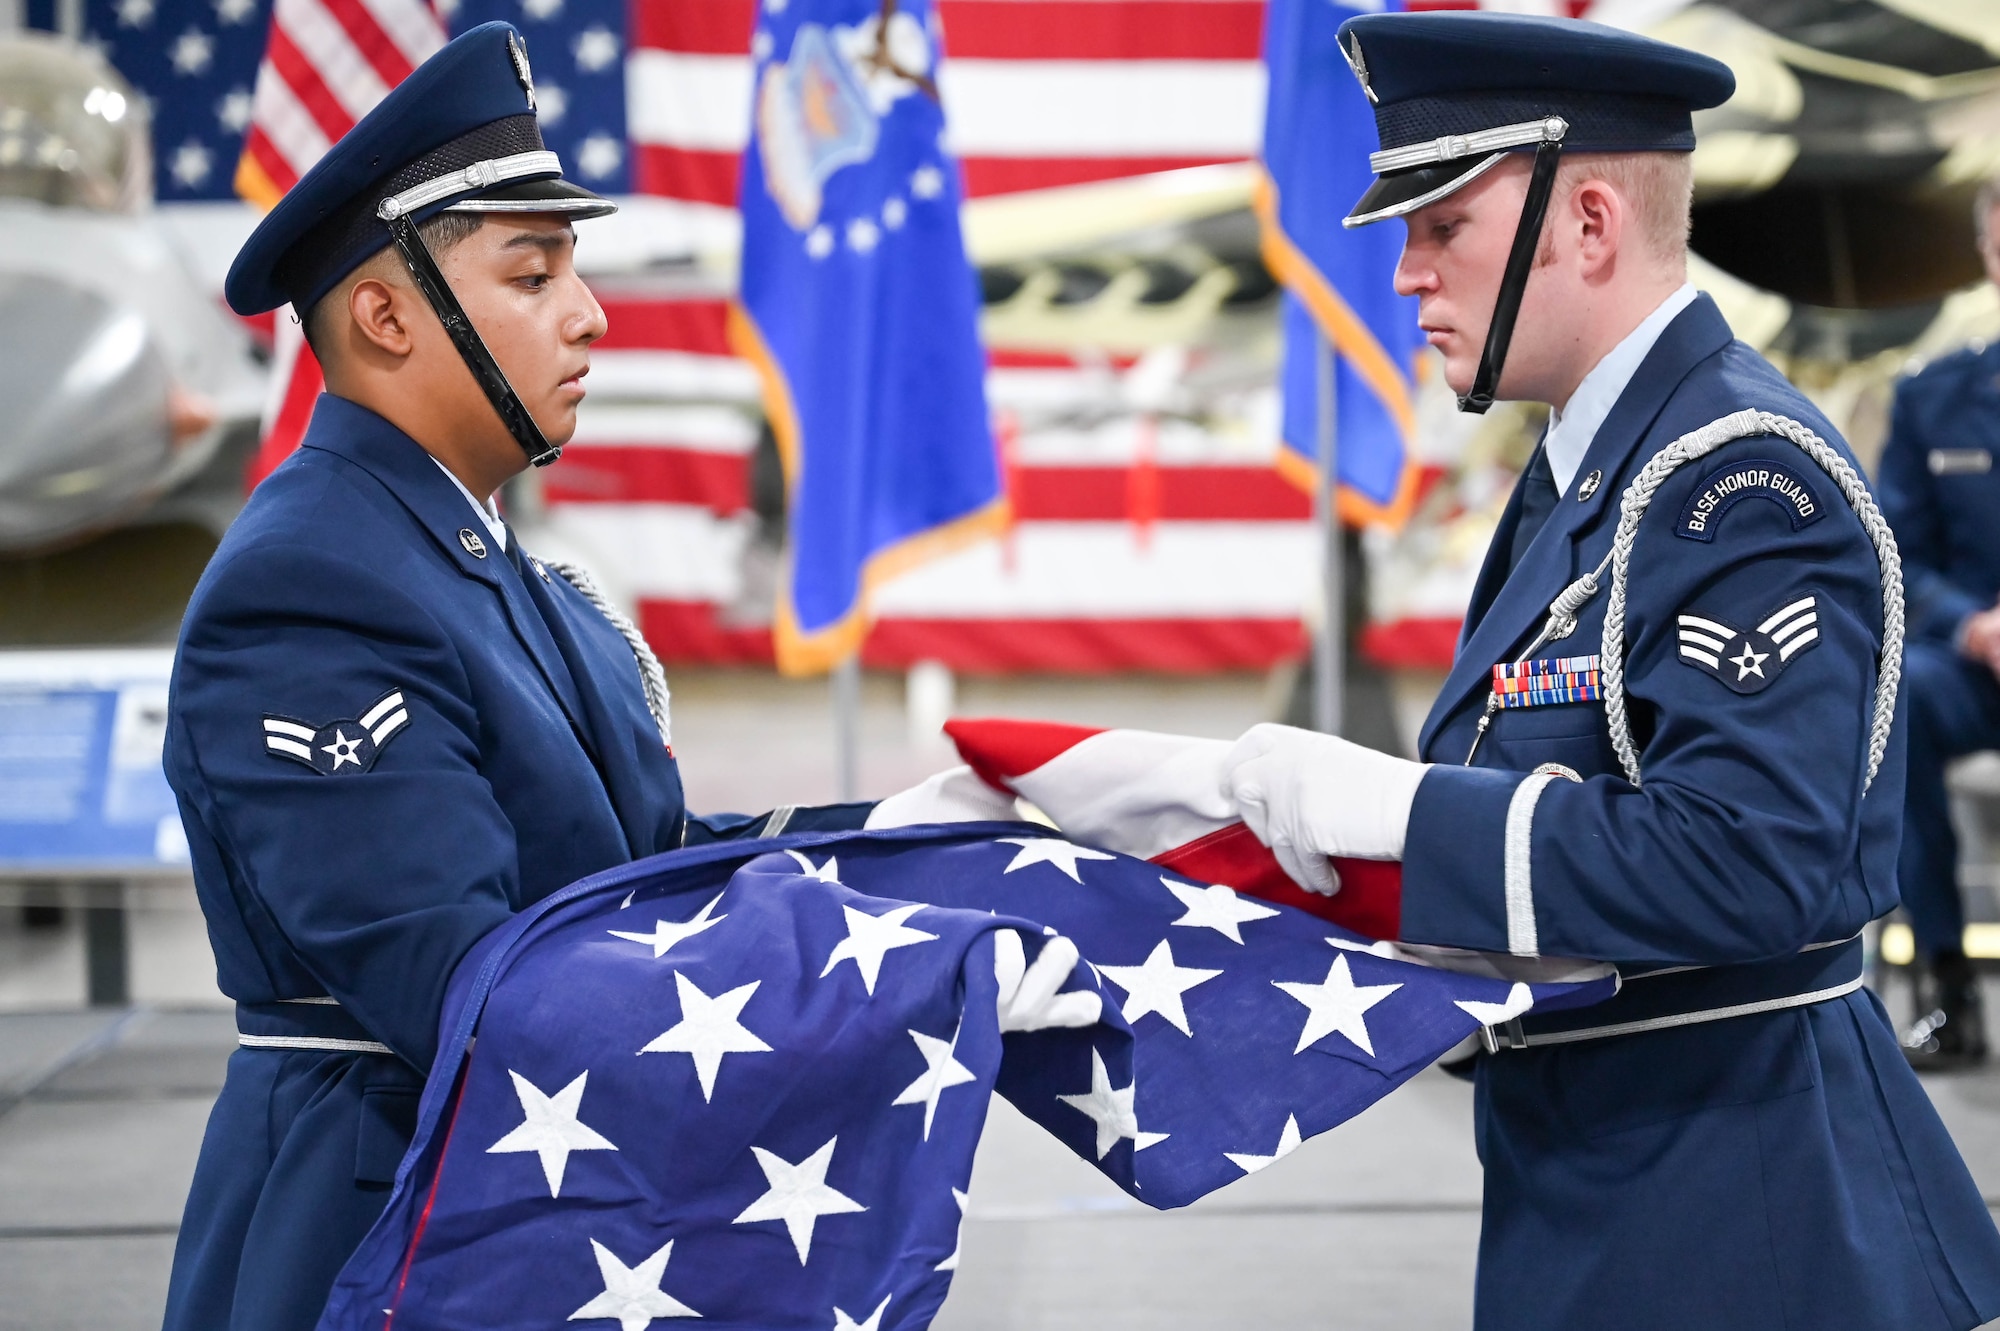 Two airmen in dress blues fold an American flag.